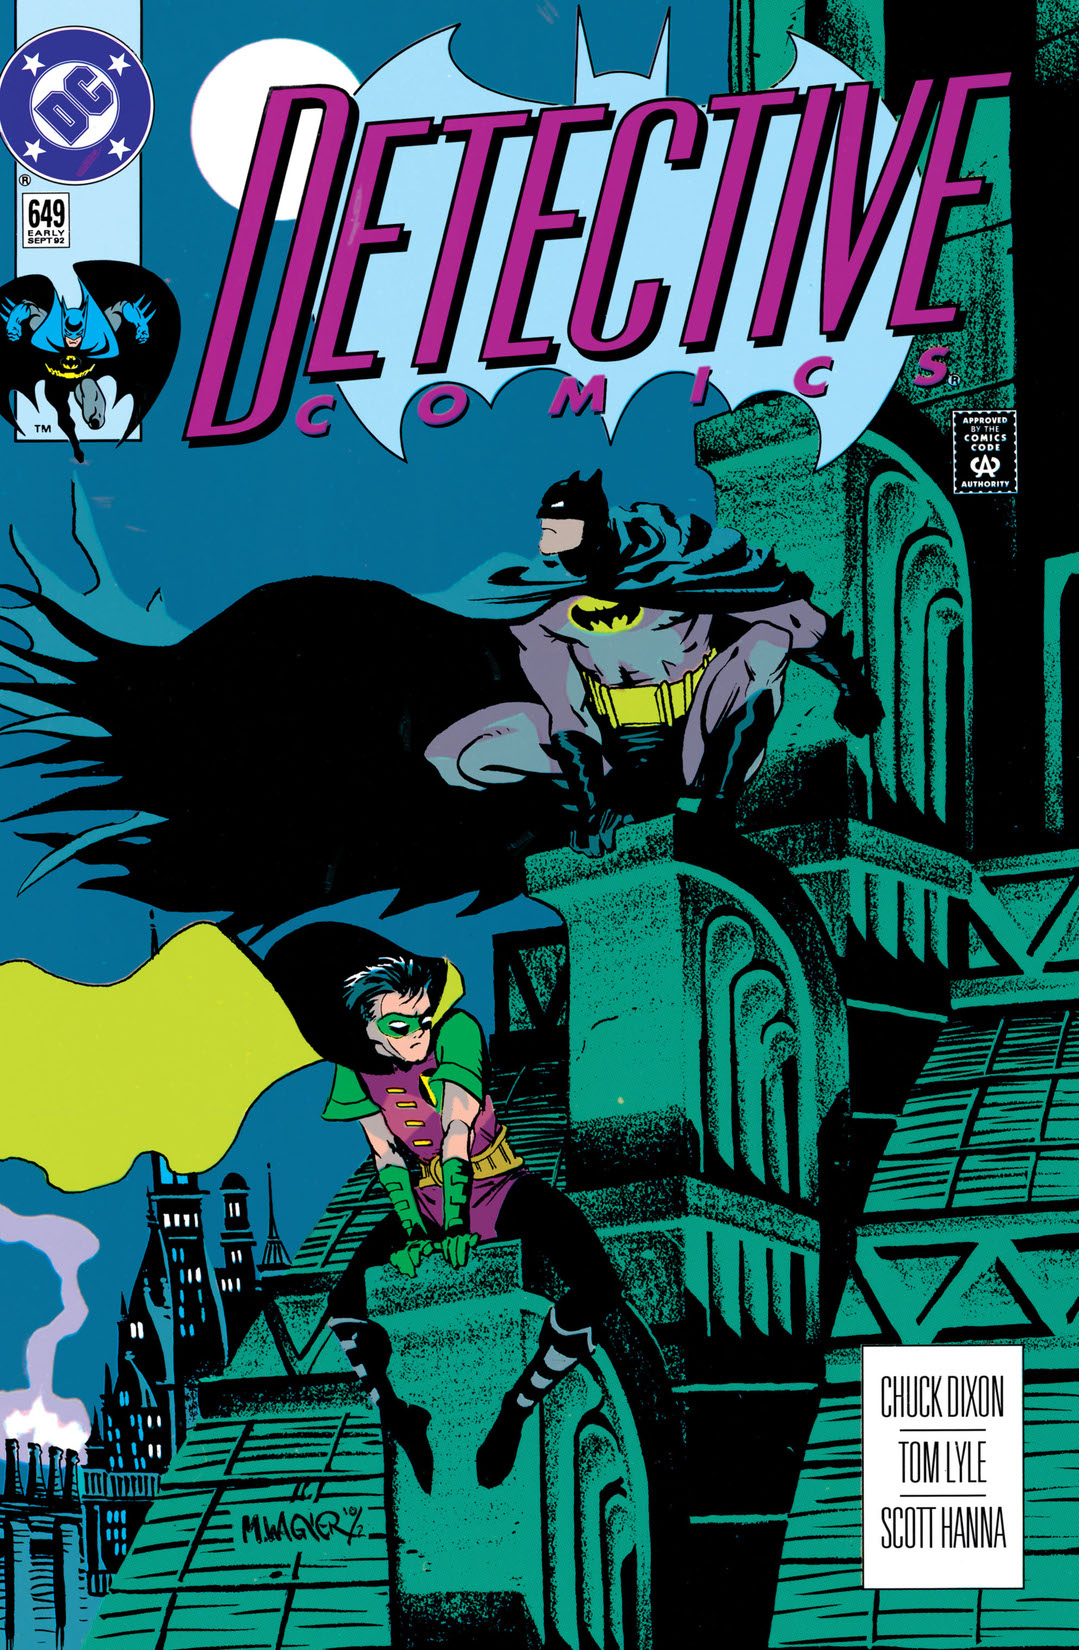 Detective Comics (1937-) #649 preview images